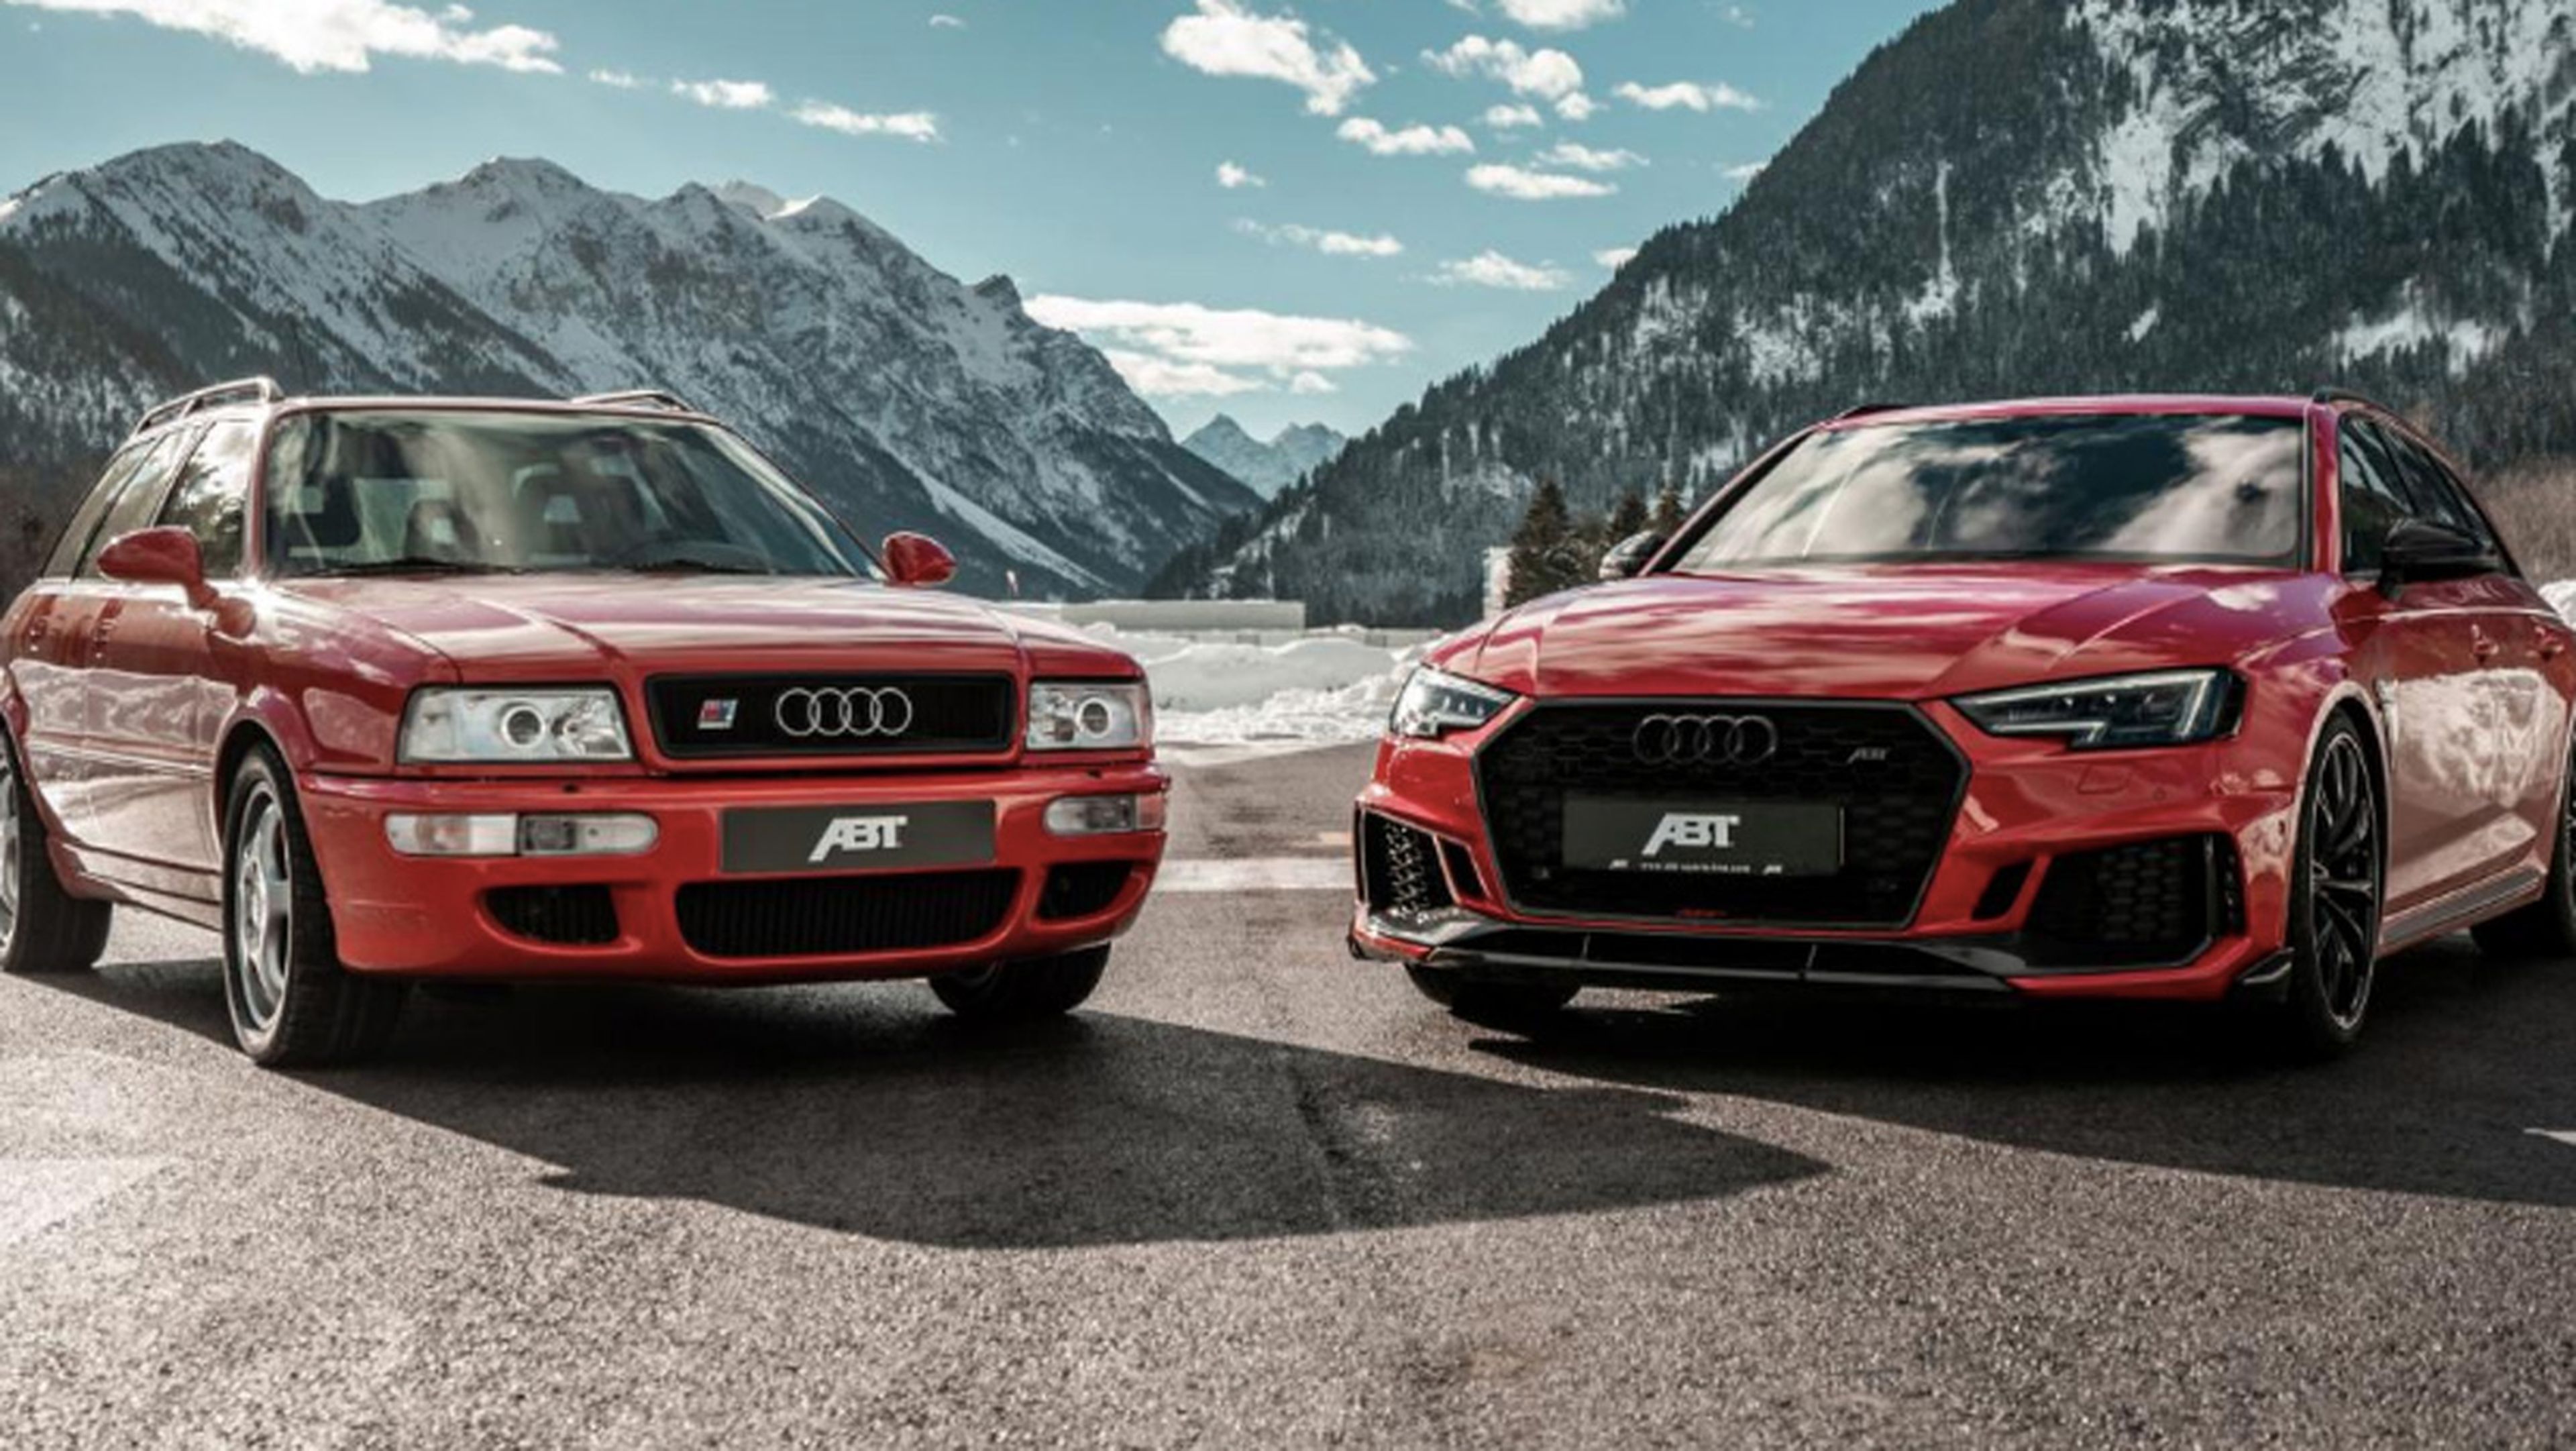 Audi ABT RS2 y Audi ABT RS4+, frontal